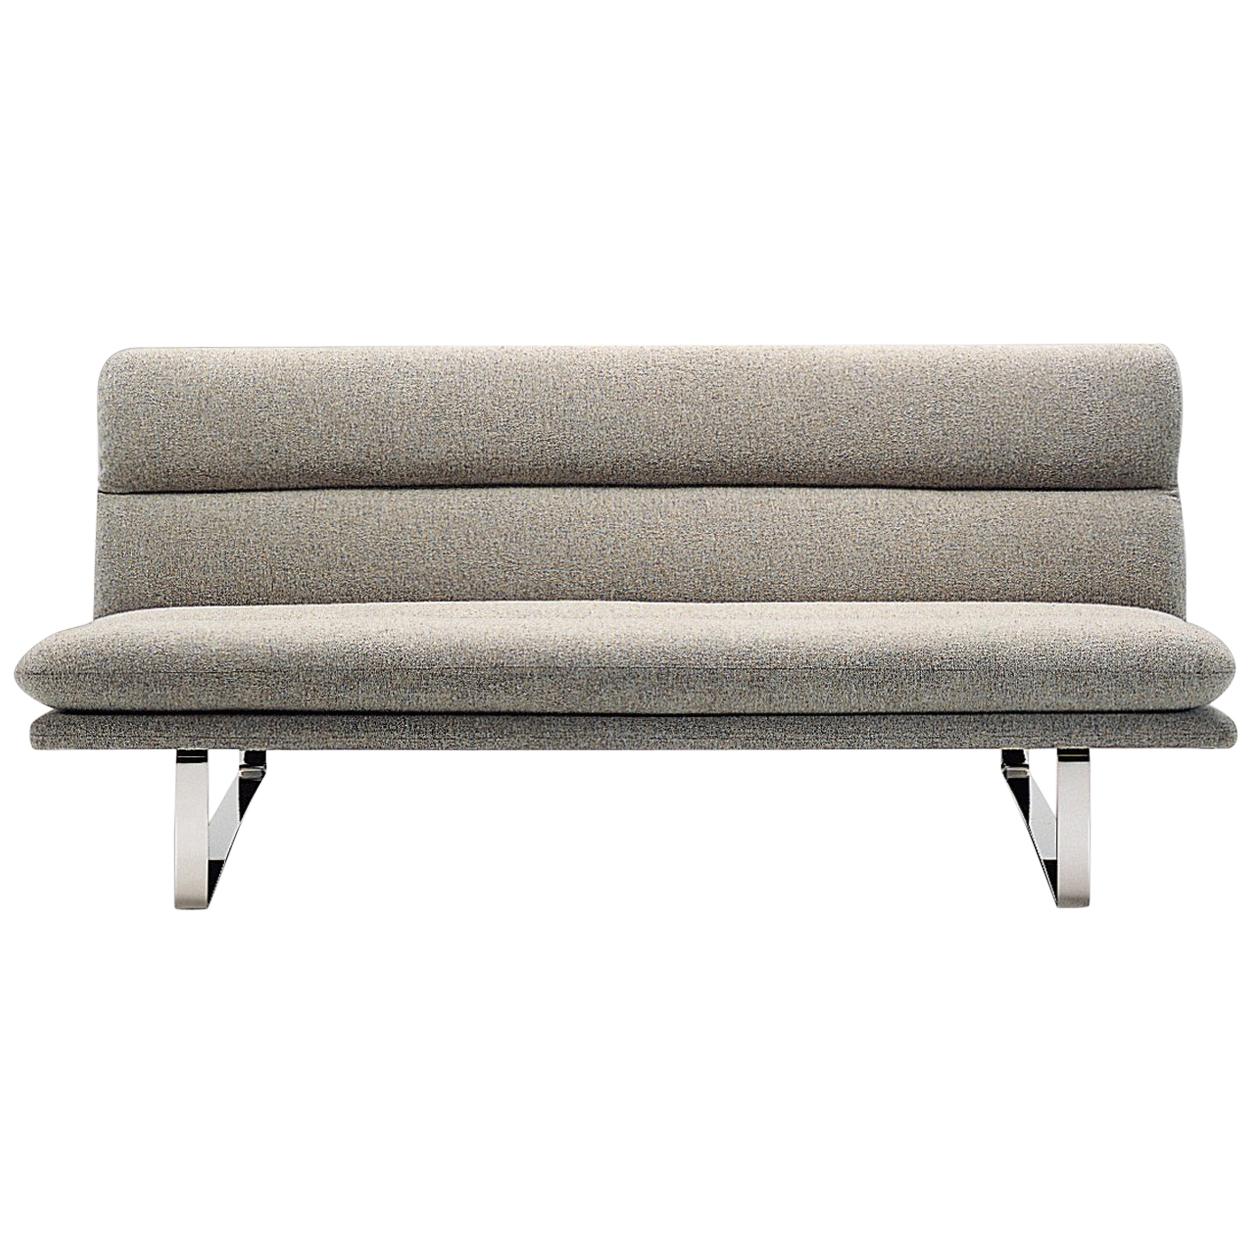 Customizable Artifort C683 Sofa  by Kho Liang Le